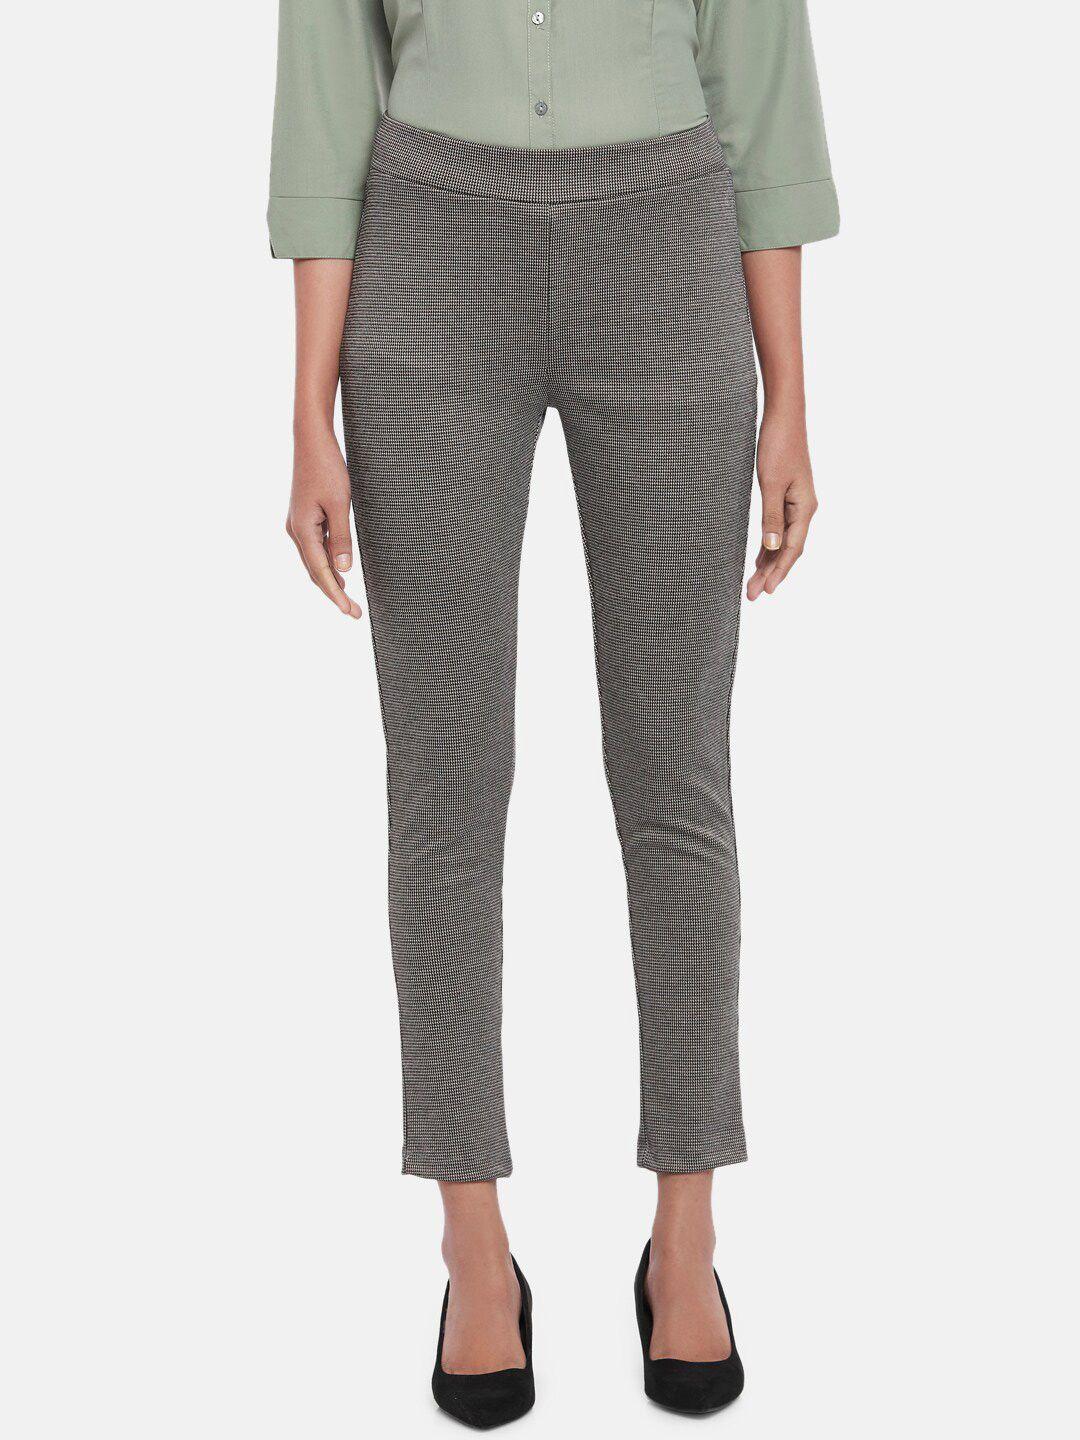 annabelle-by-pantaloons-women-grey-skinny-fit-printed-treggings